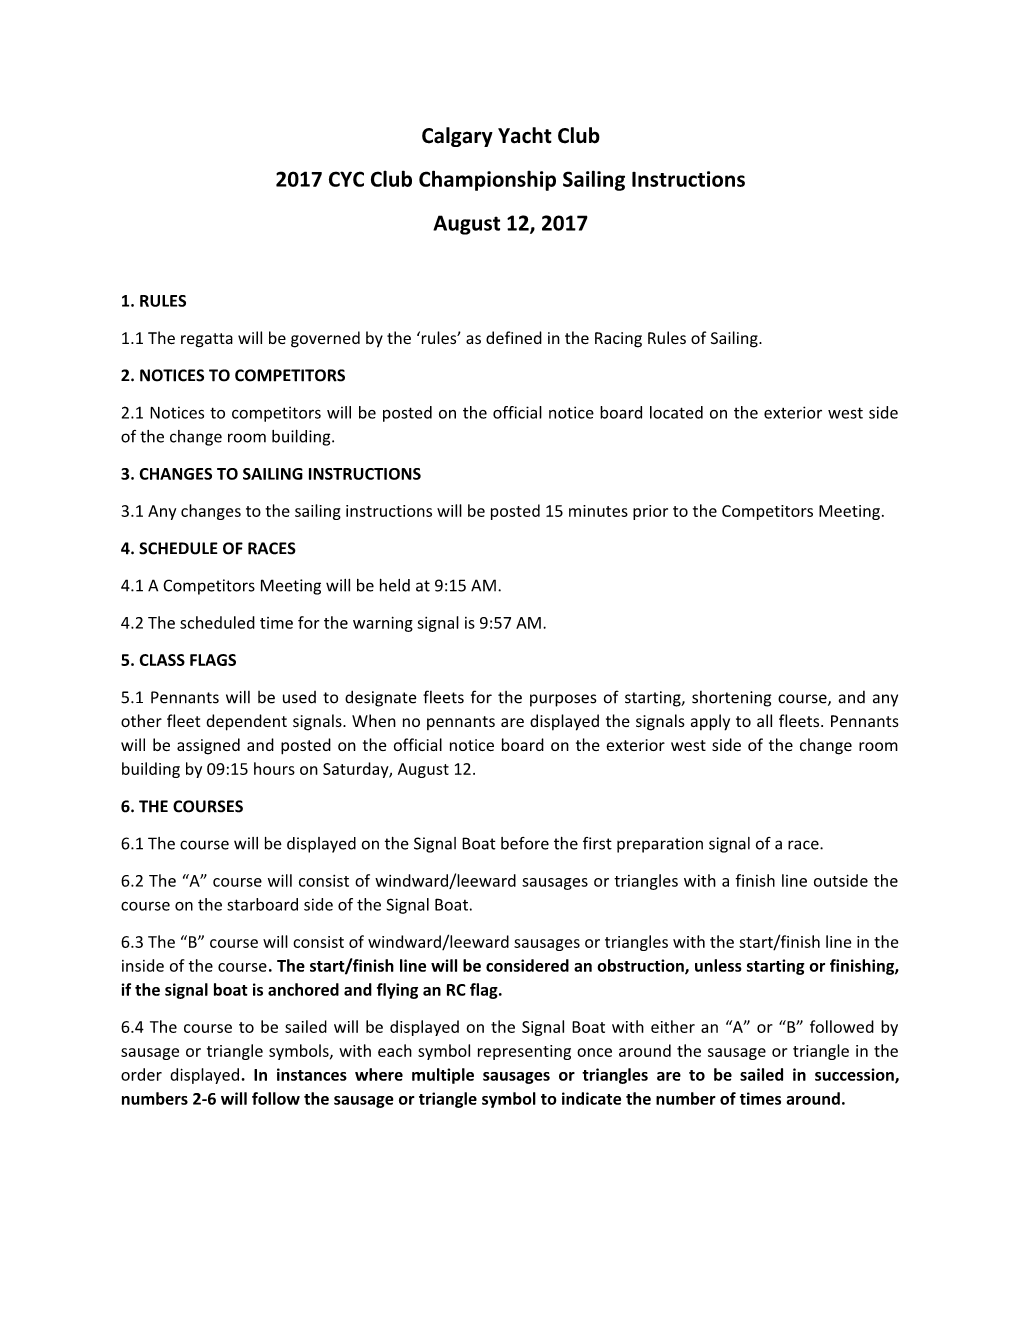 2017CYC Club Championship Sailing Instructions